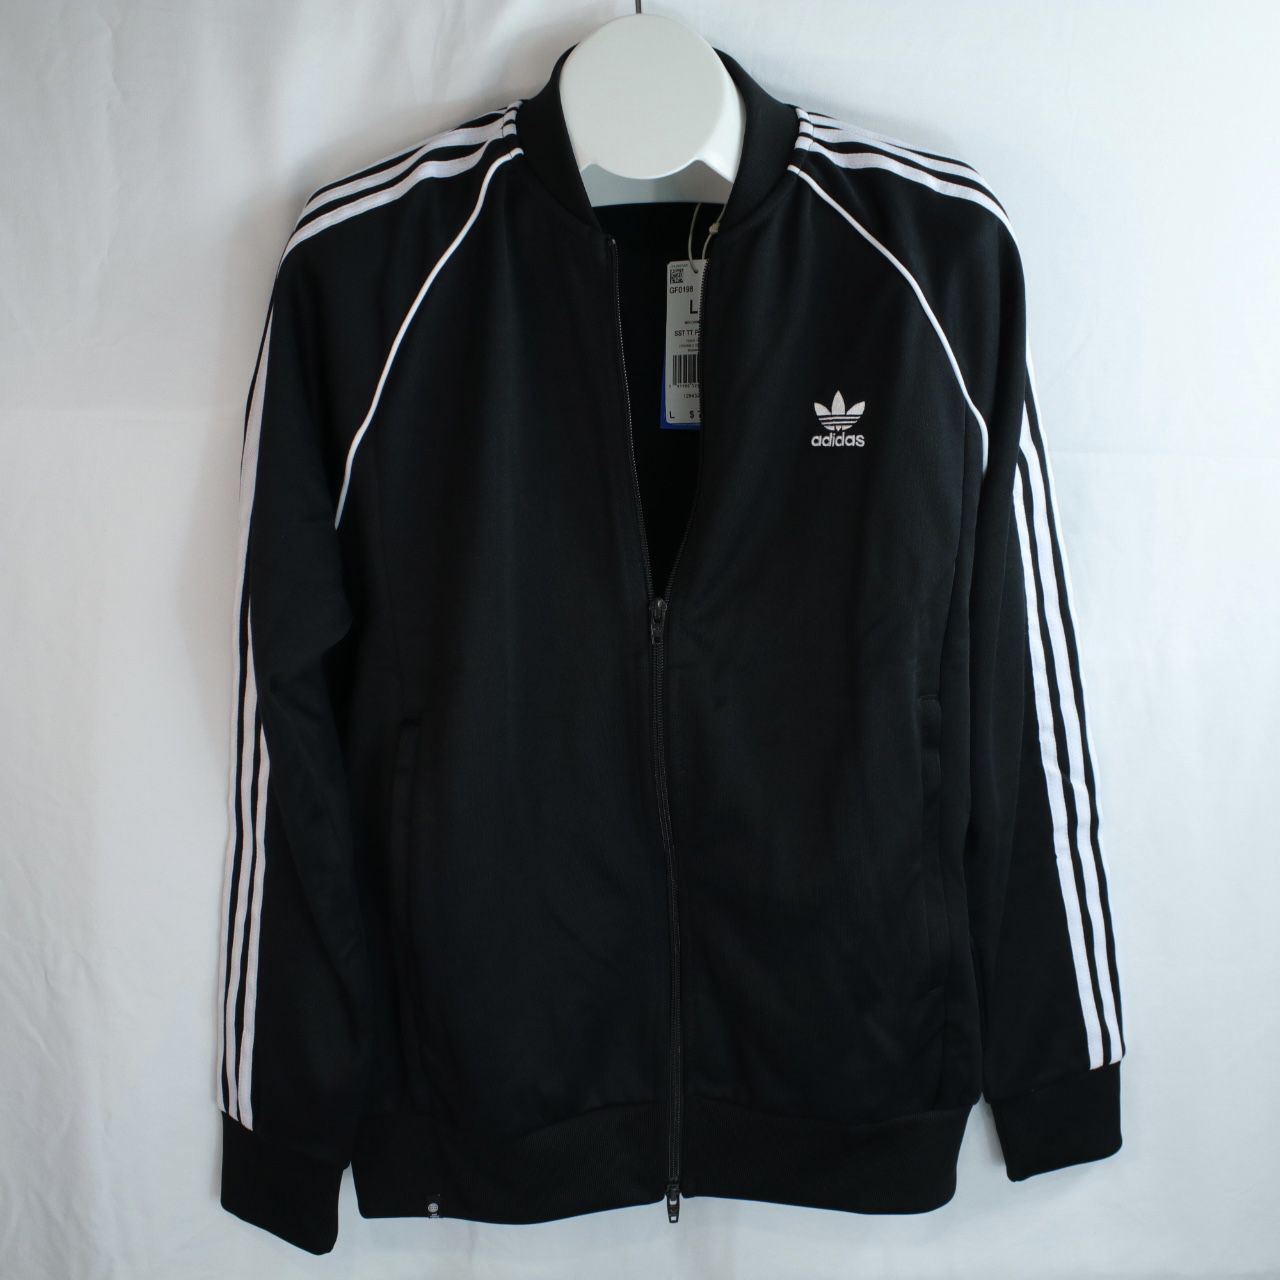 Adidas Black and White Zip Up Track Jacket Mens Size Large - NEW